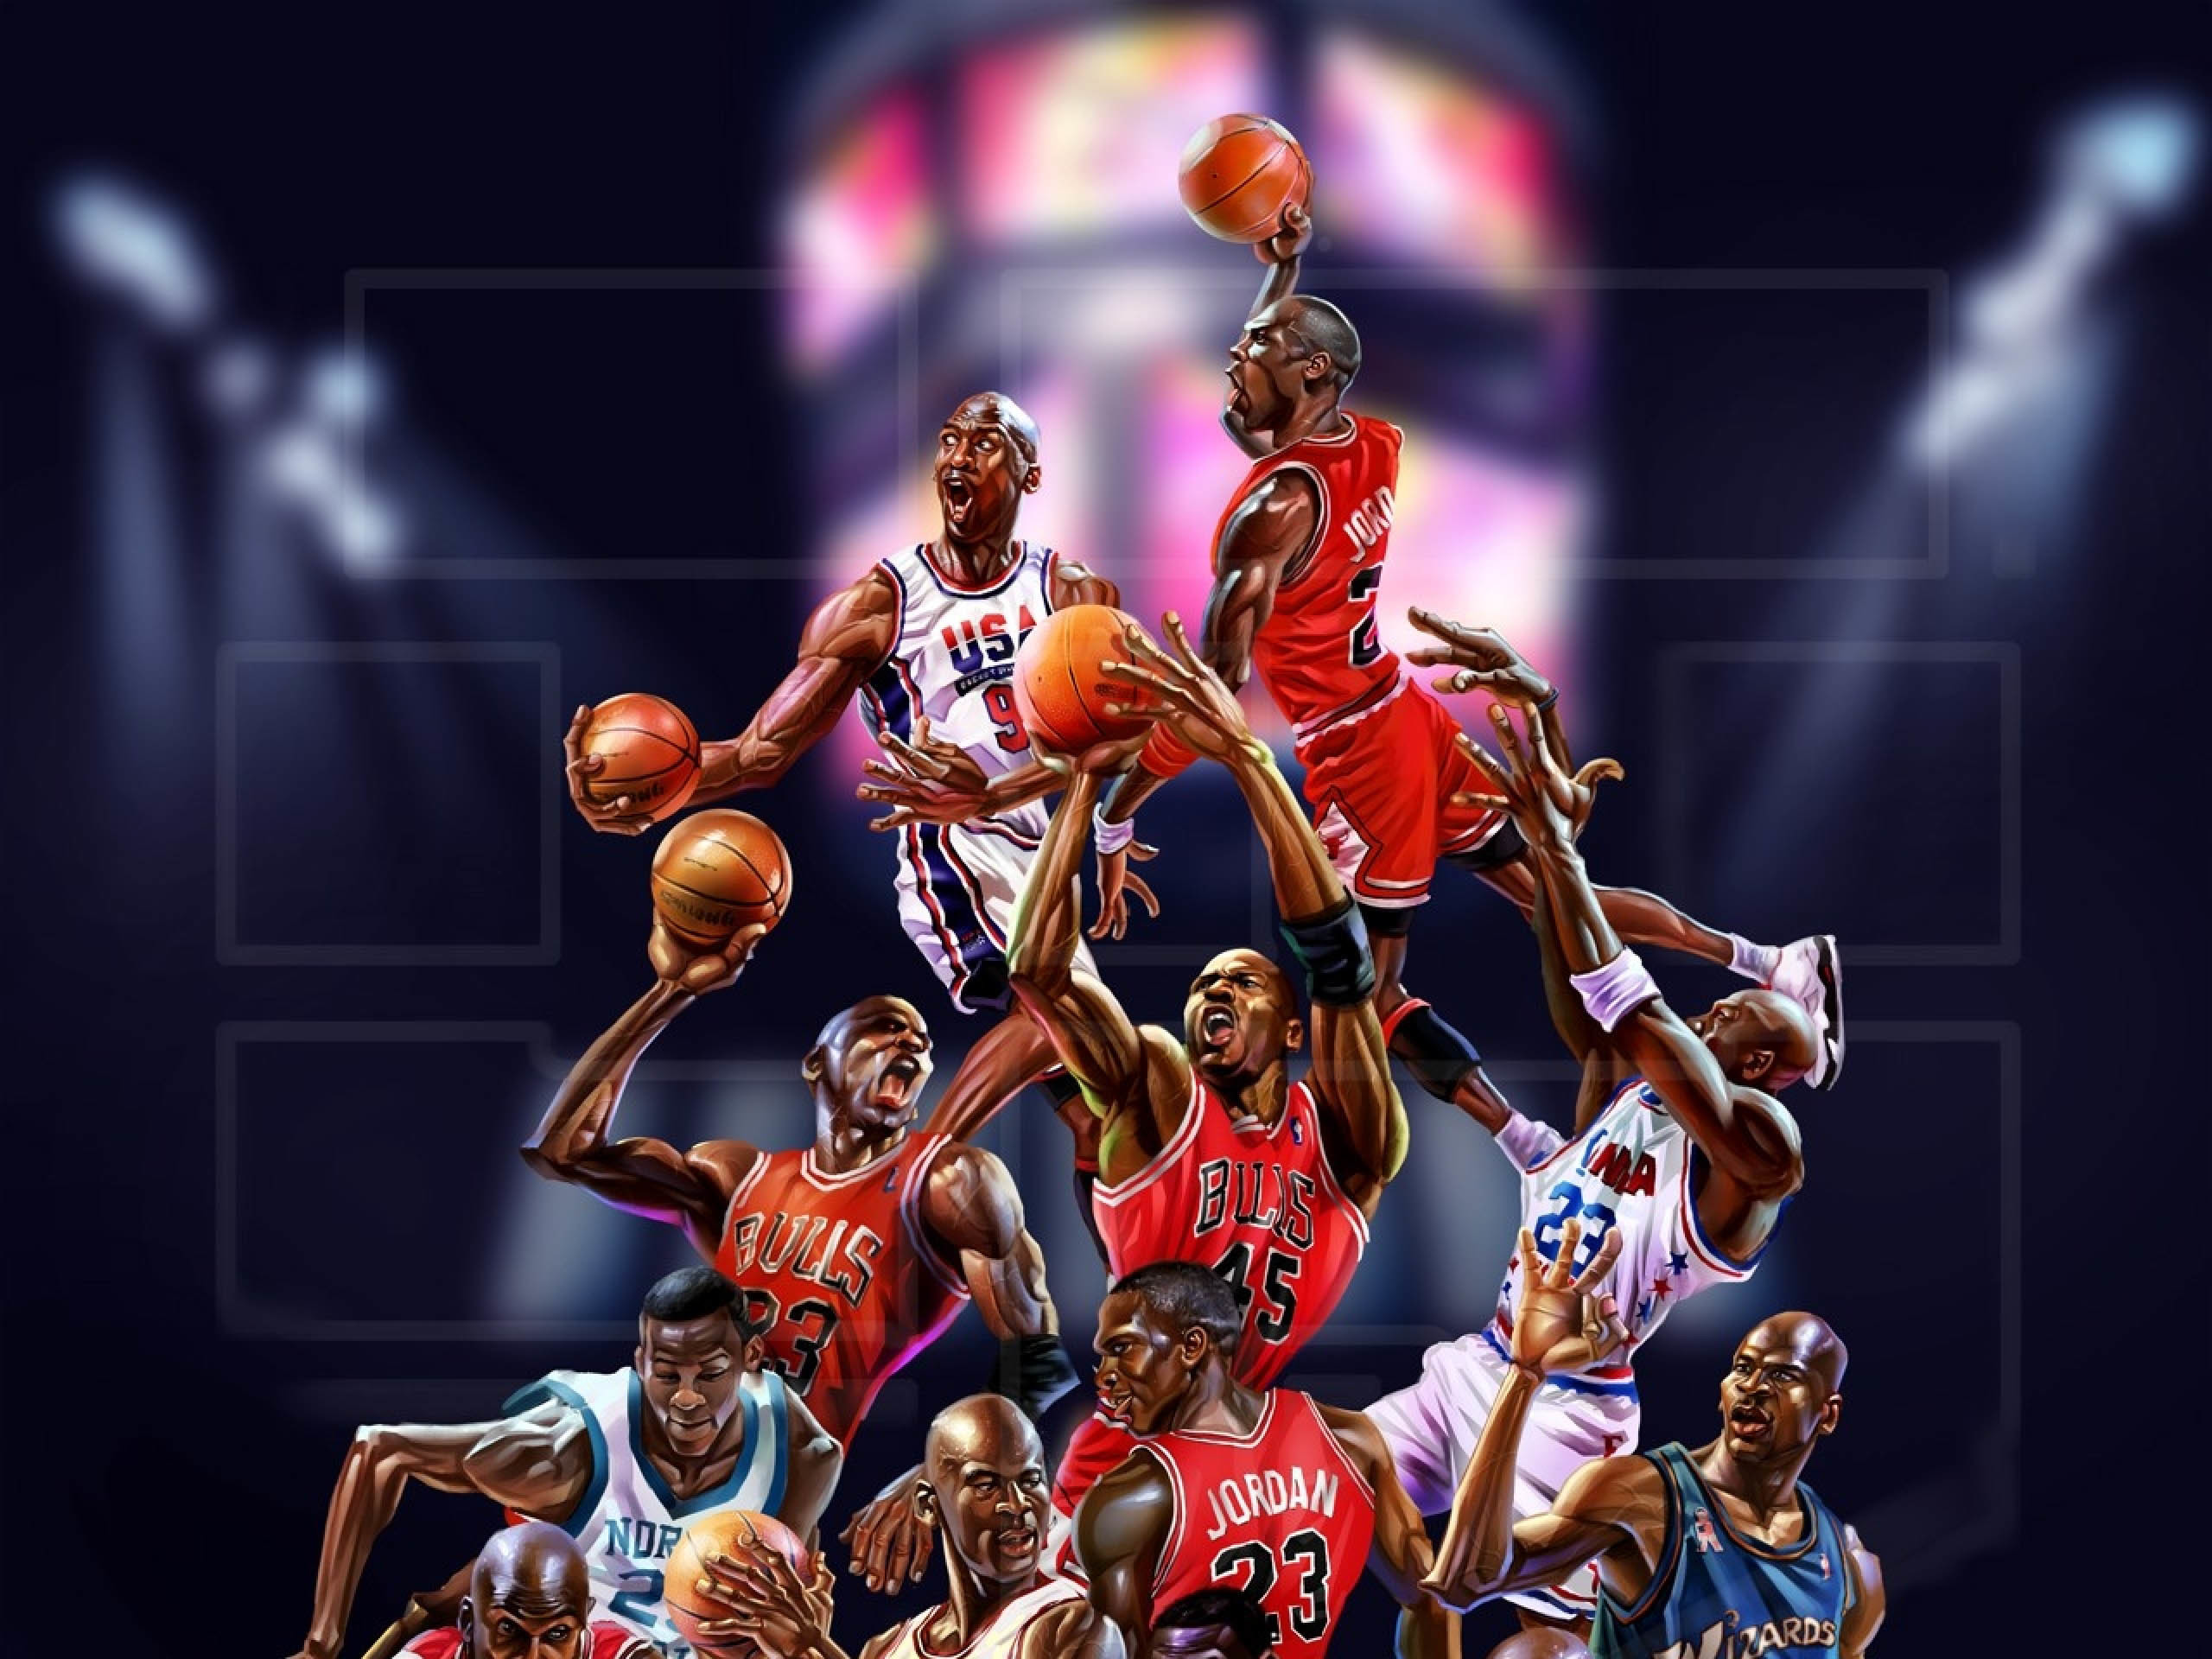 Michael Jordan Nba Slam Dunk Contest Wallpaper Hd Photo By Sports Sunday  Propertyofjack Image  फट शयर